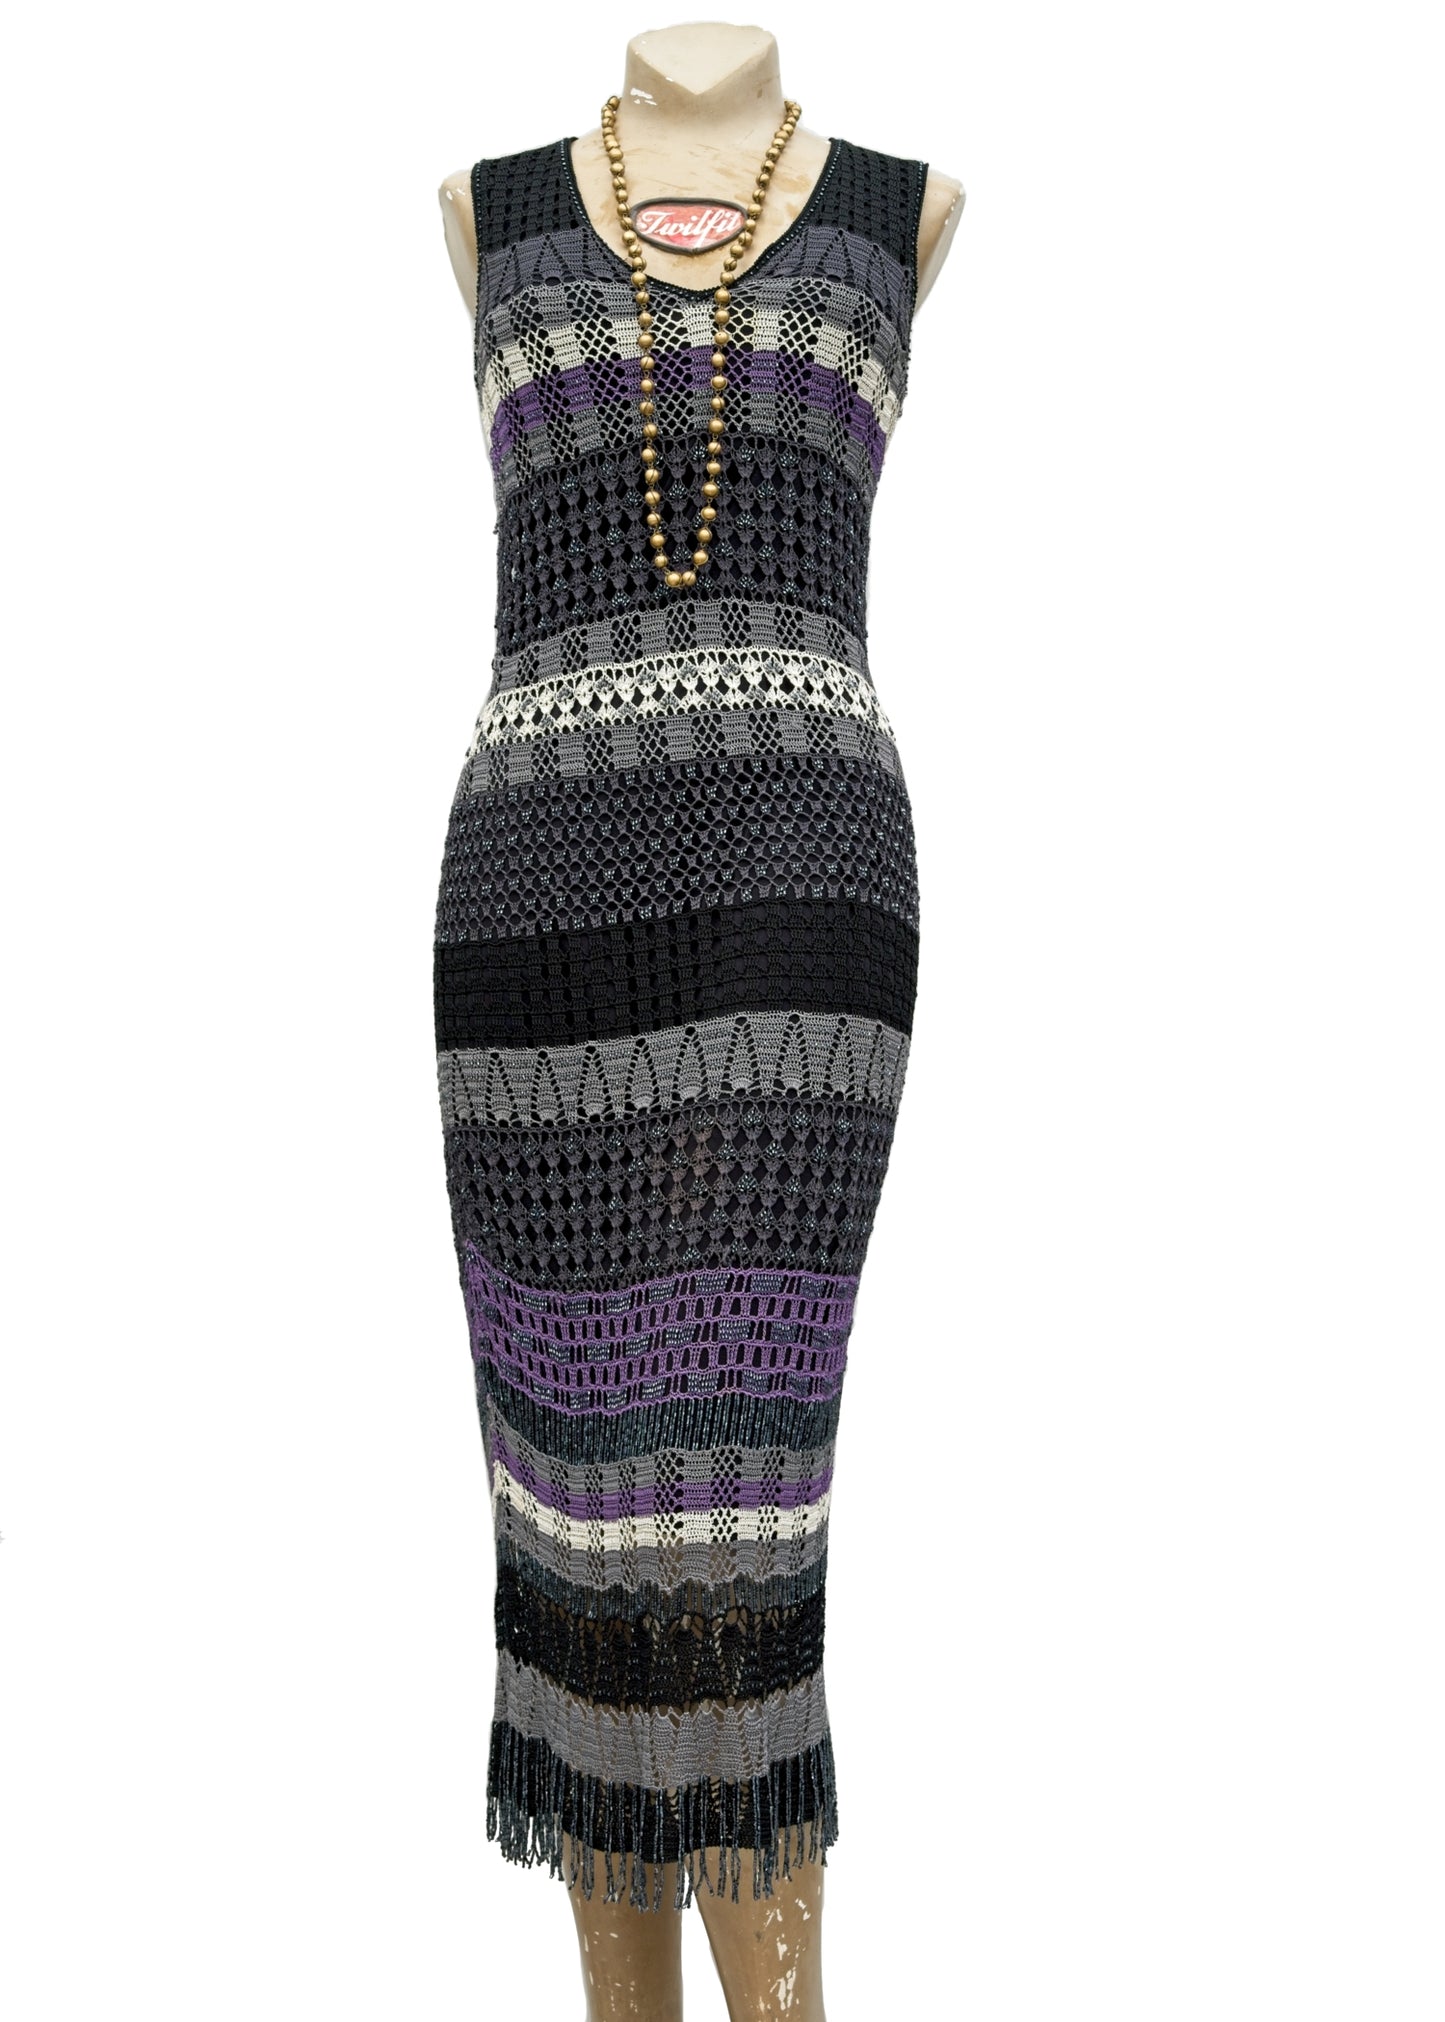 1990s Vintage Purple Beaded Crochet Party Flapper Dress • Egyptian Revival Inspired